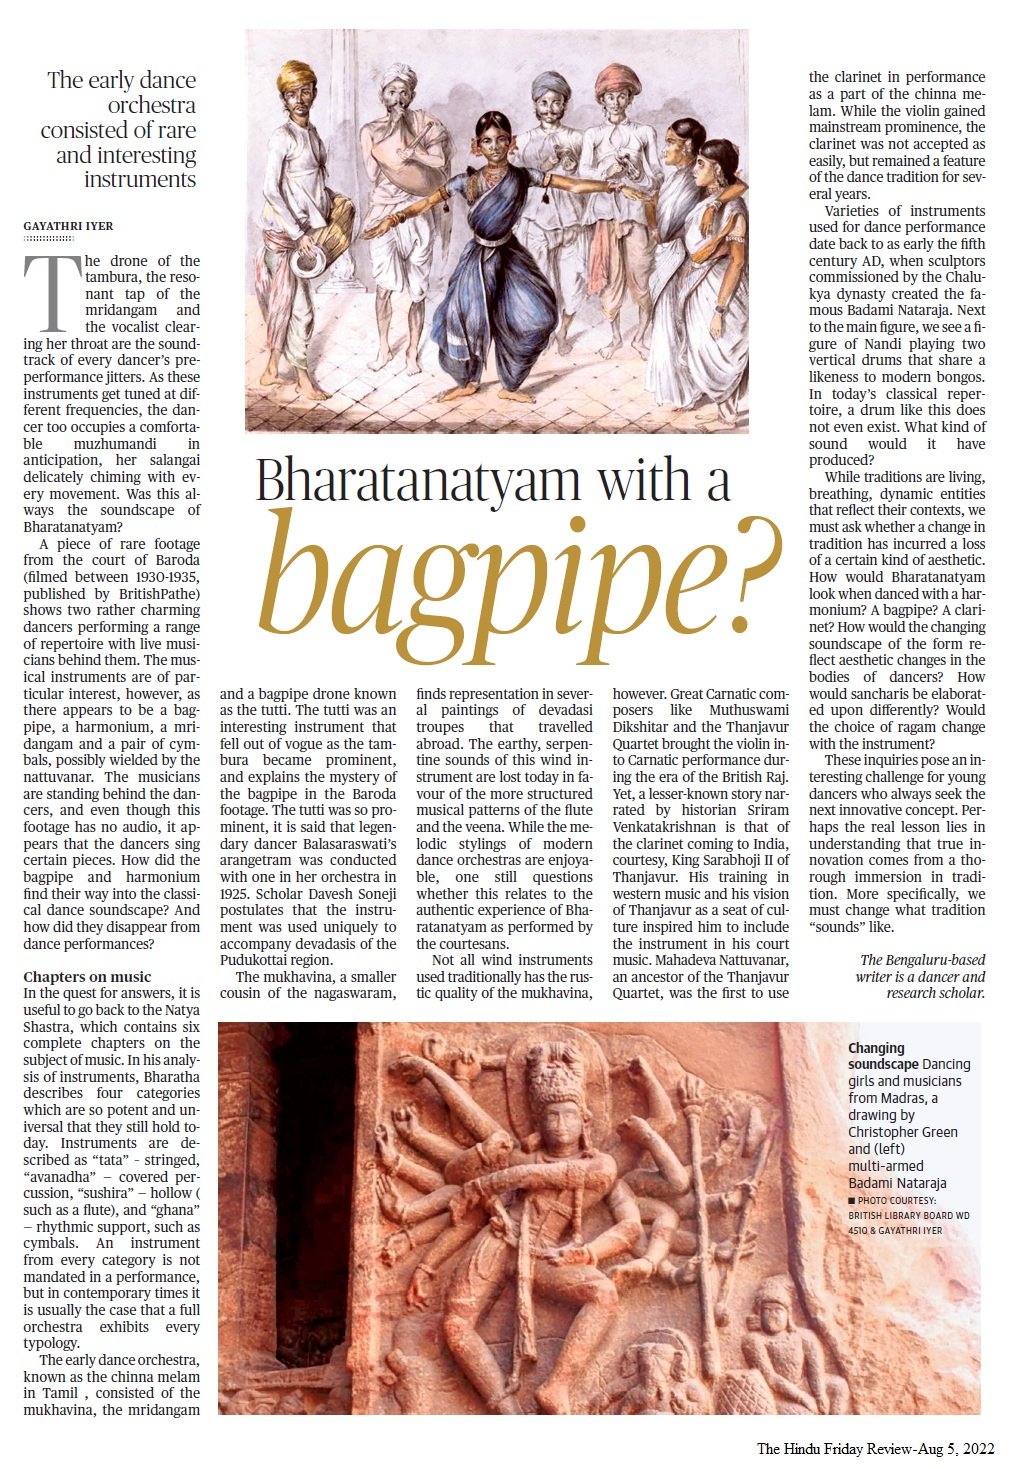 Bharatanatyam with a bagpipe? - Gayathri Iyer